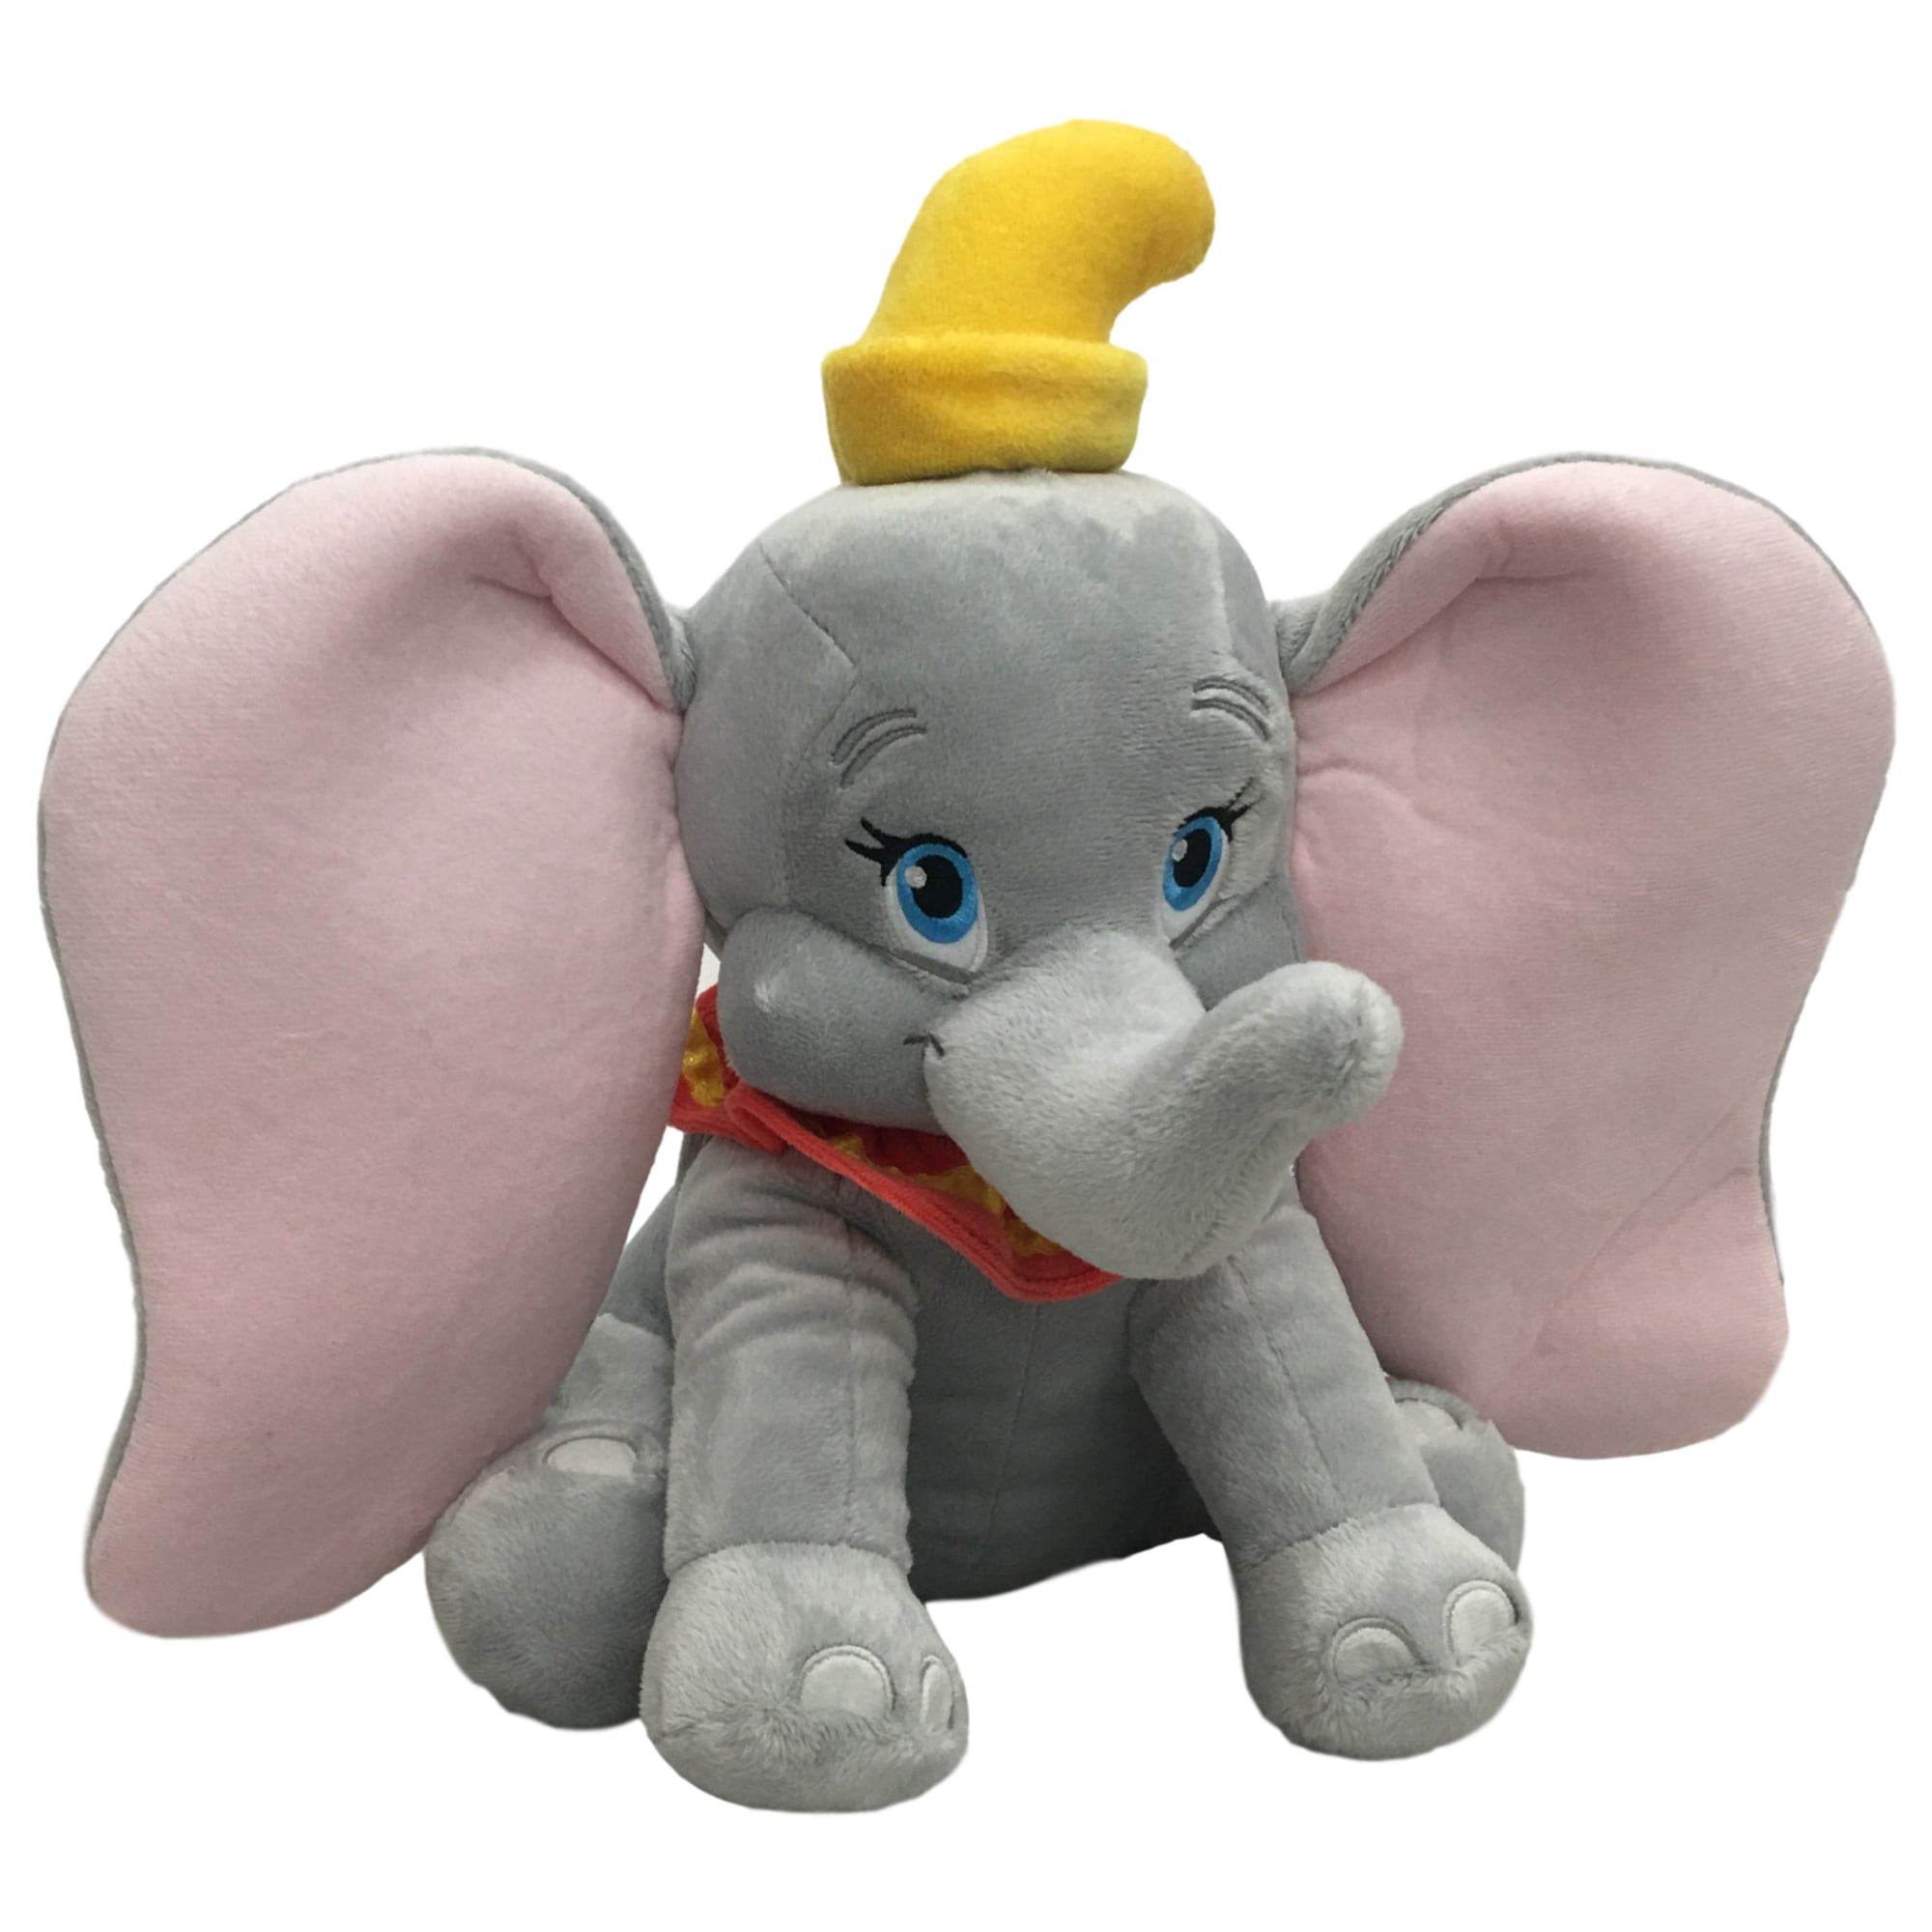 Kohl's Kohls Cares Disney Dumbo Plush Soft Stuffed Doll Toy 9 inches tall 